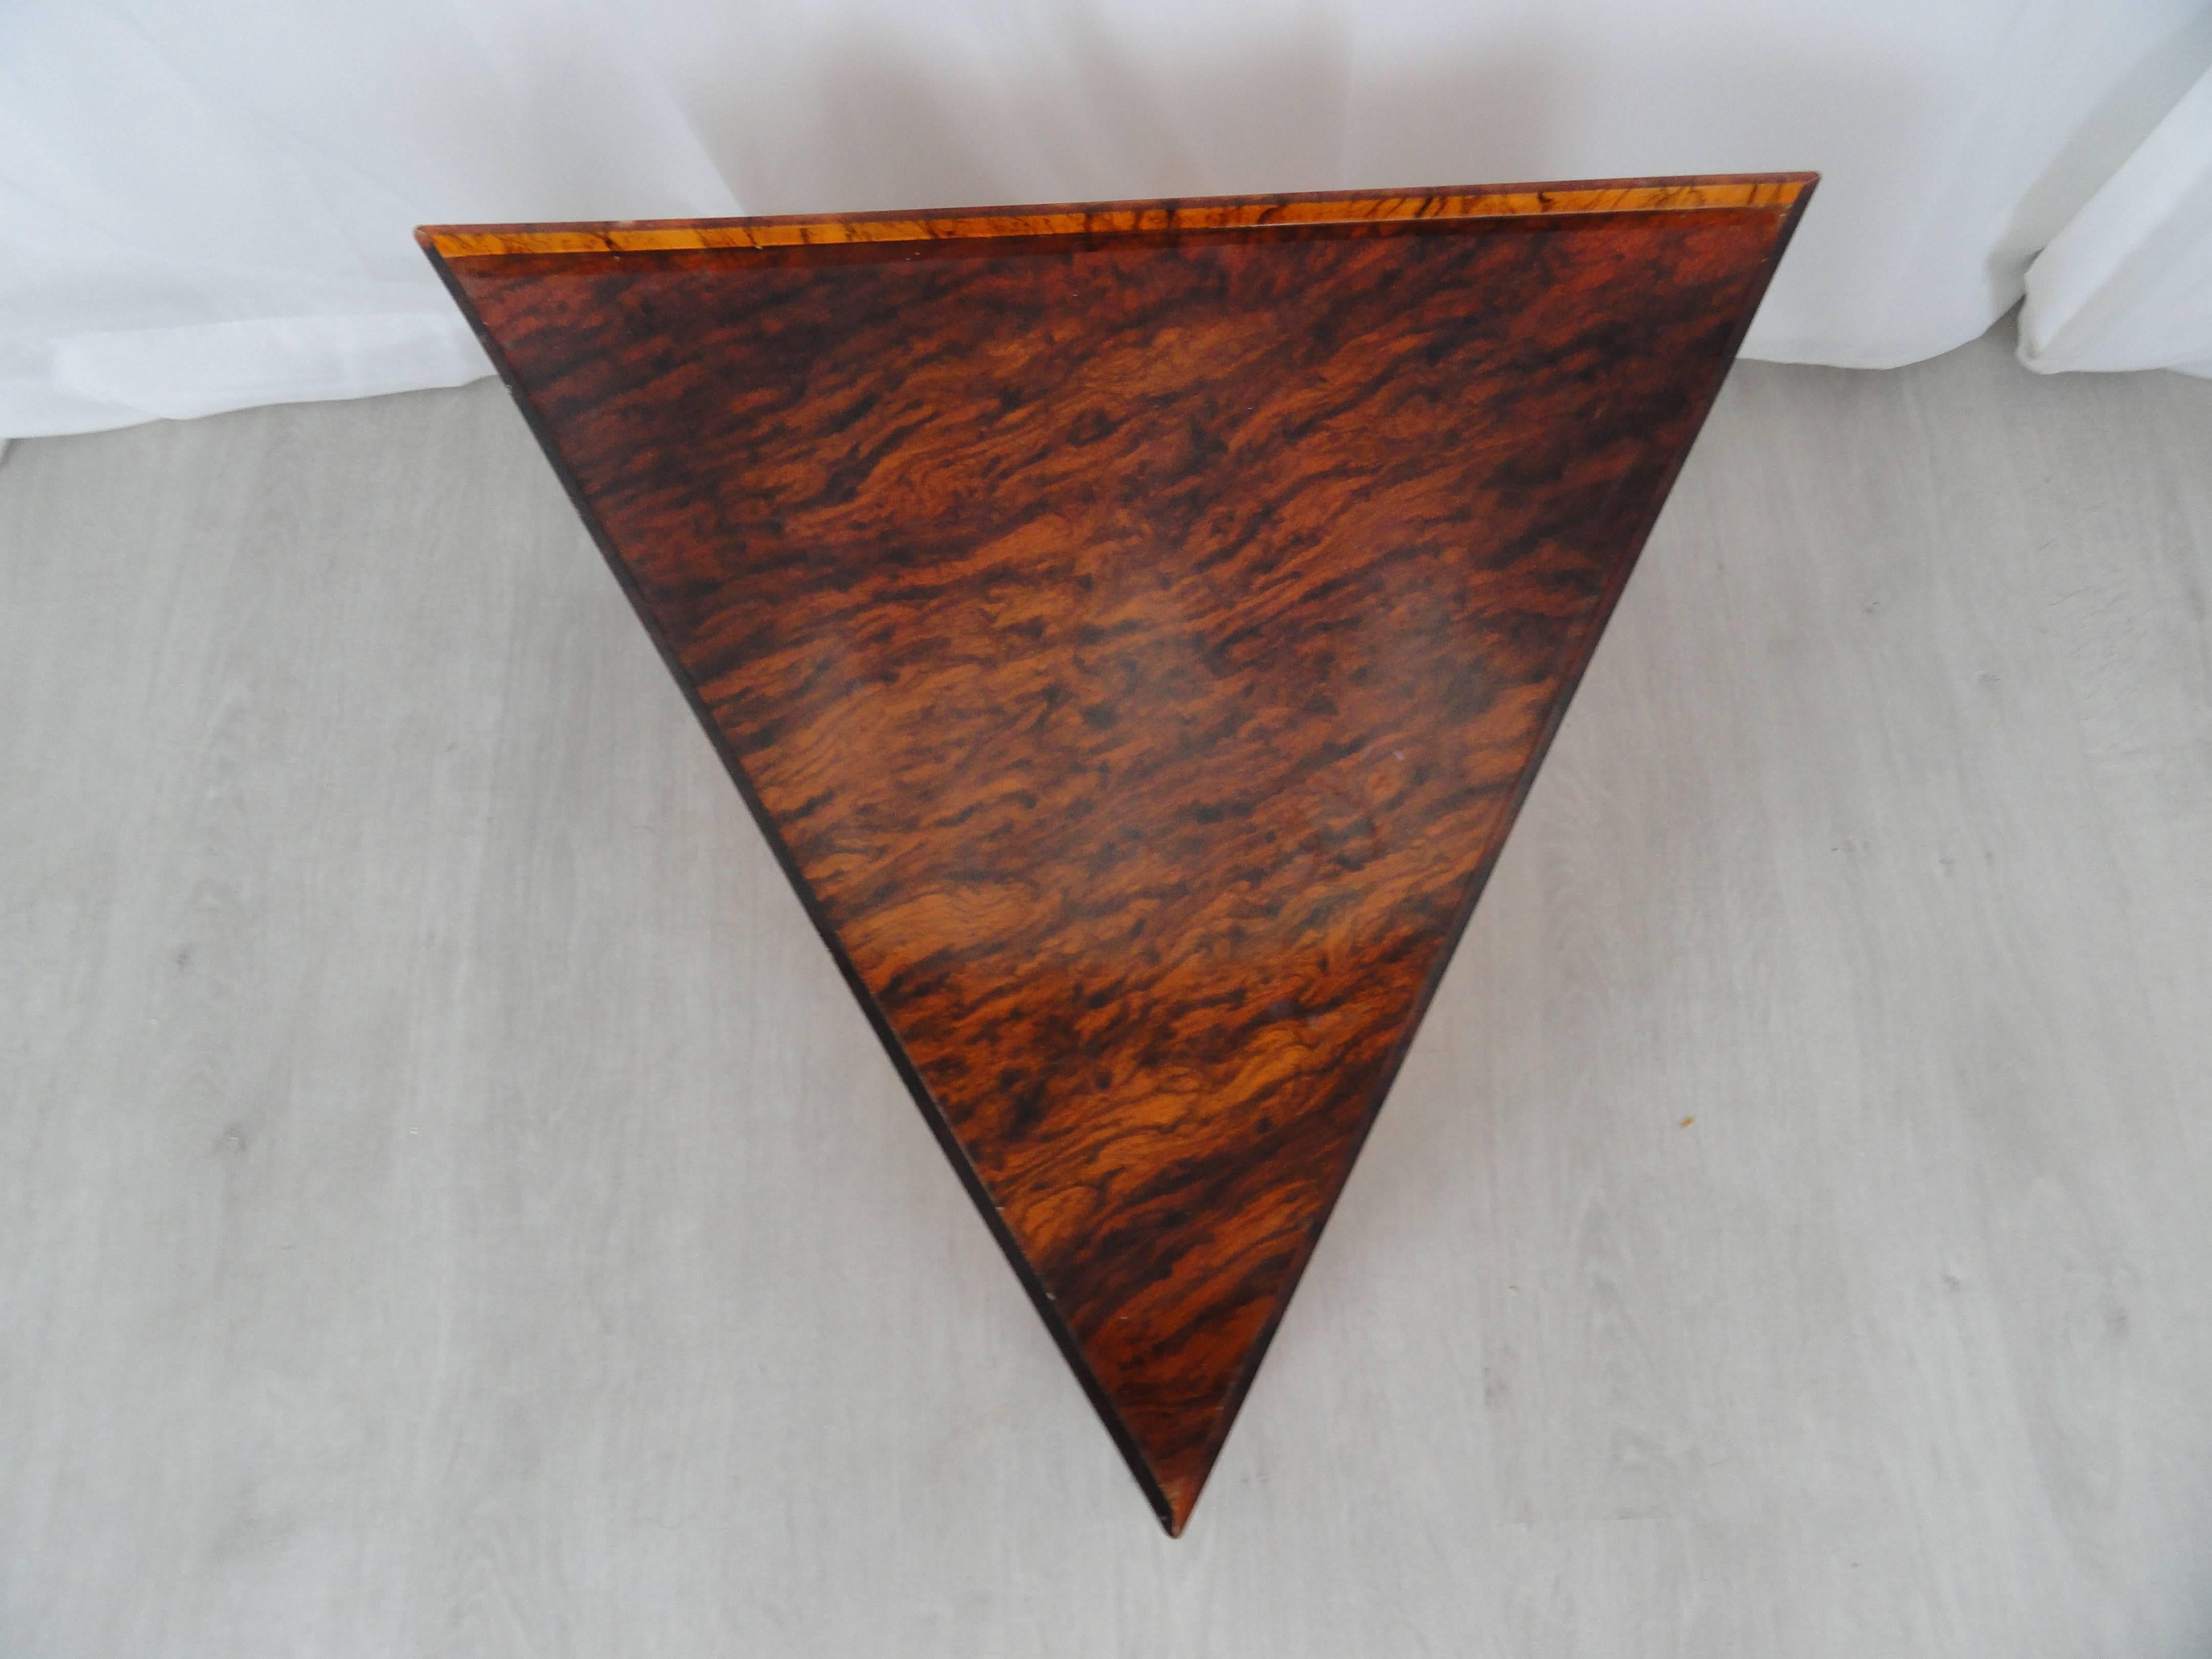 Faux tortoiseshell acrylic triangle table. Measure: 12